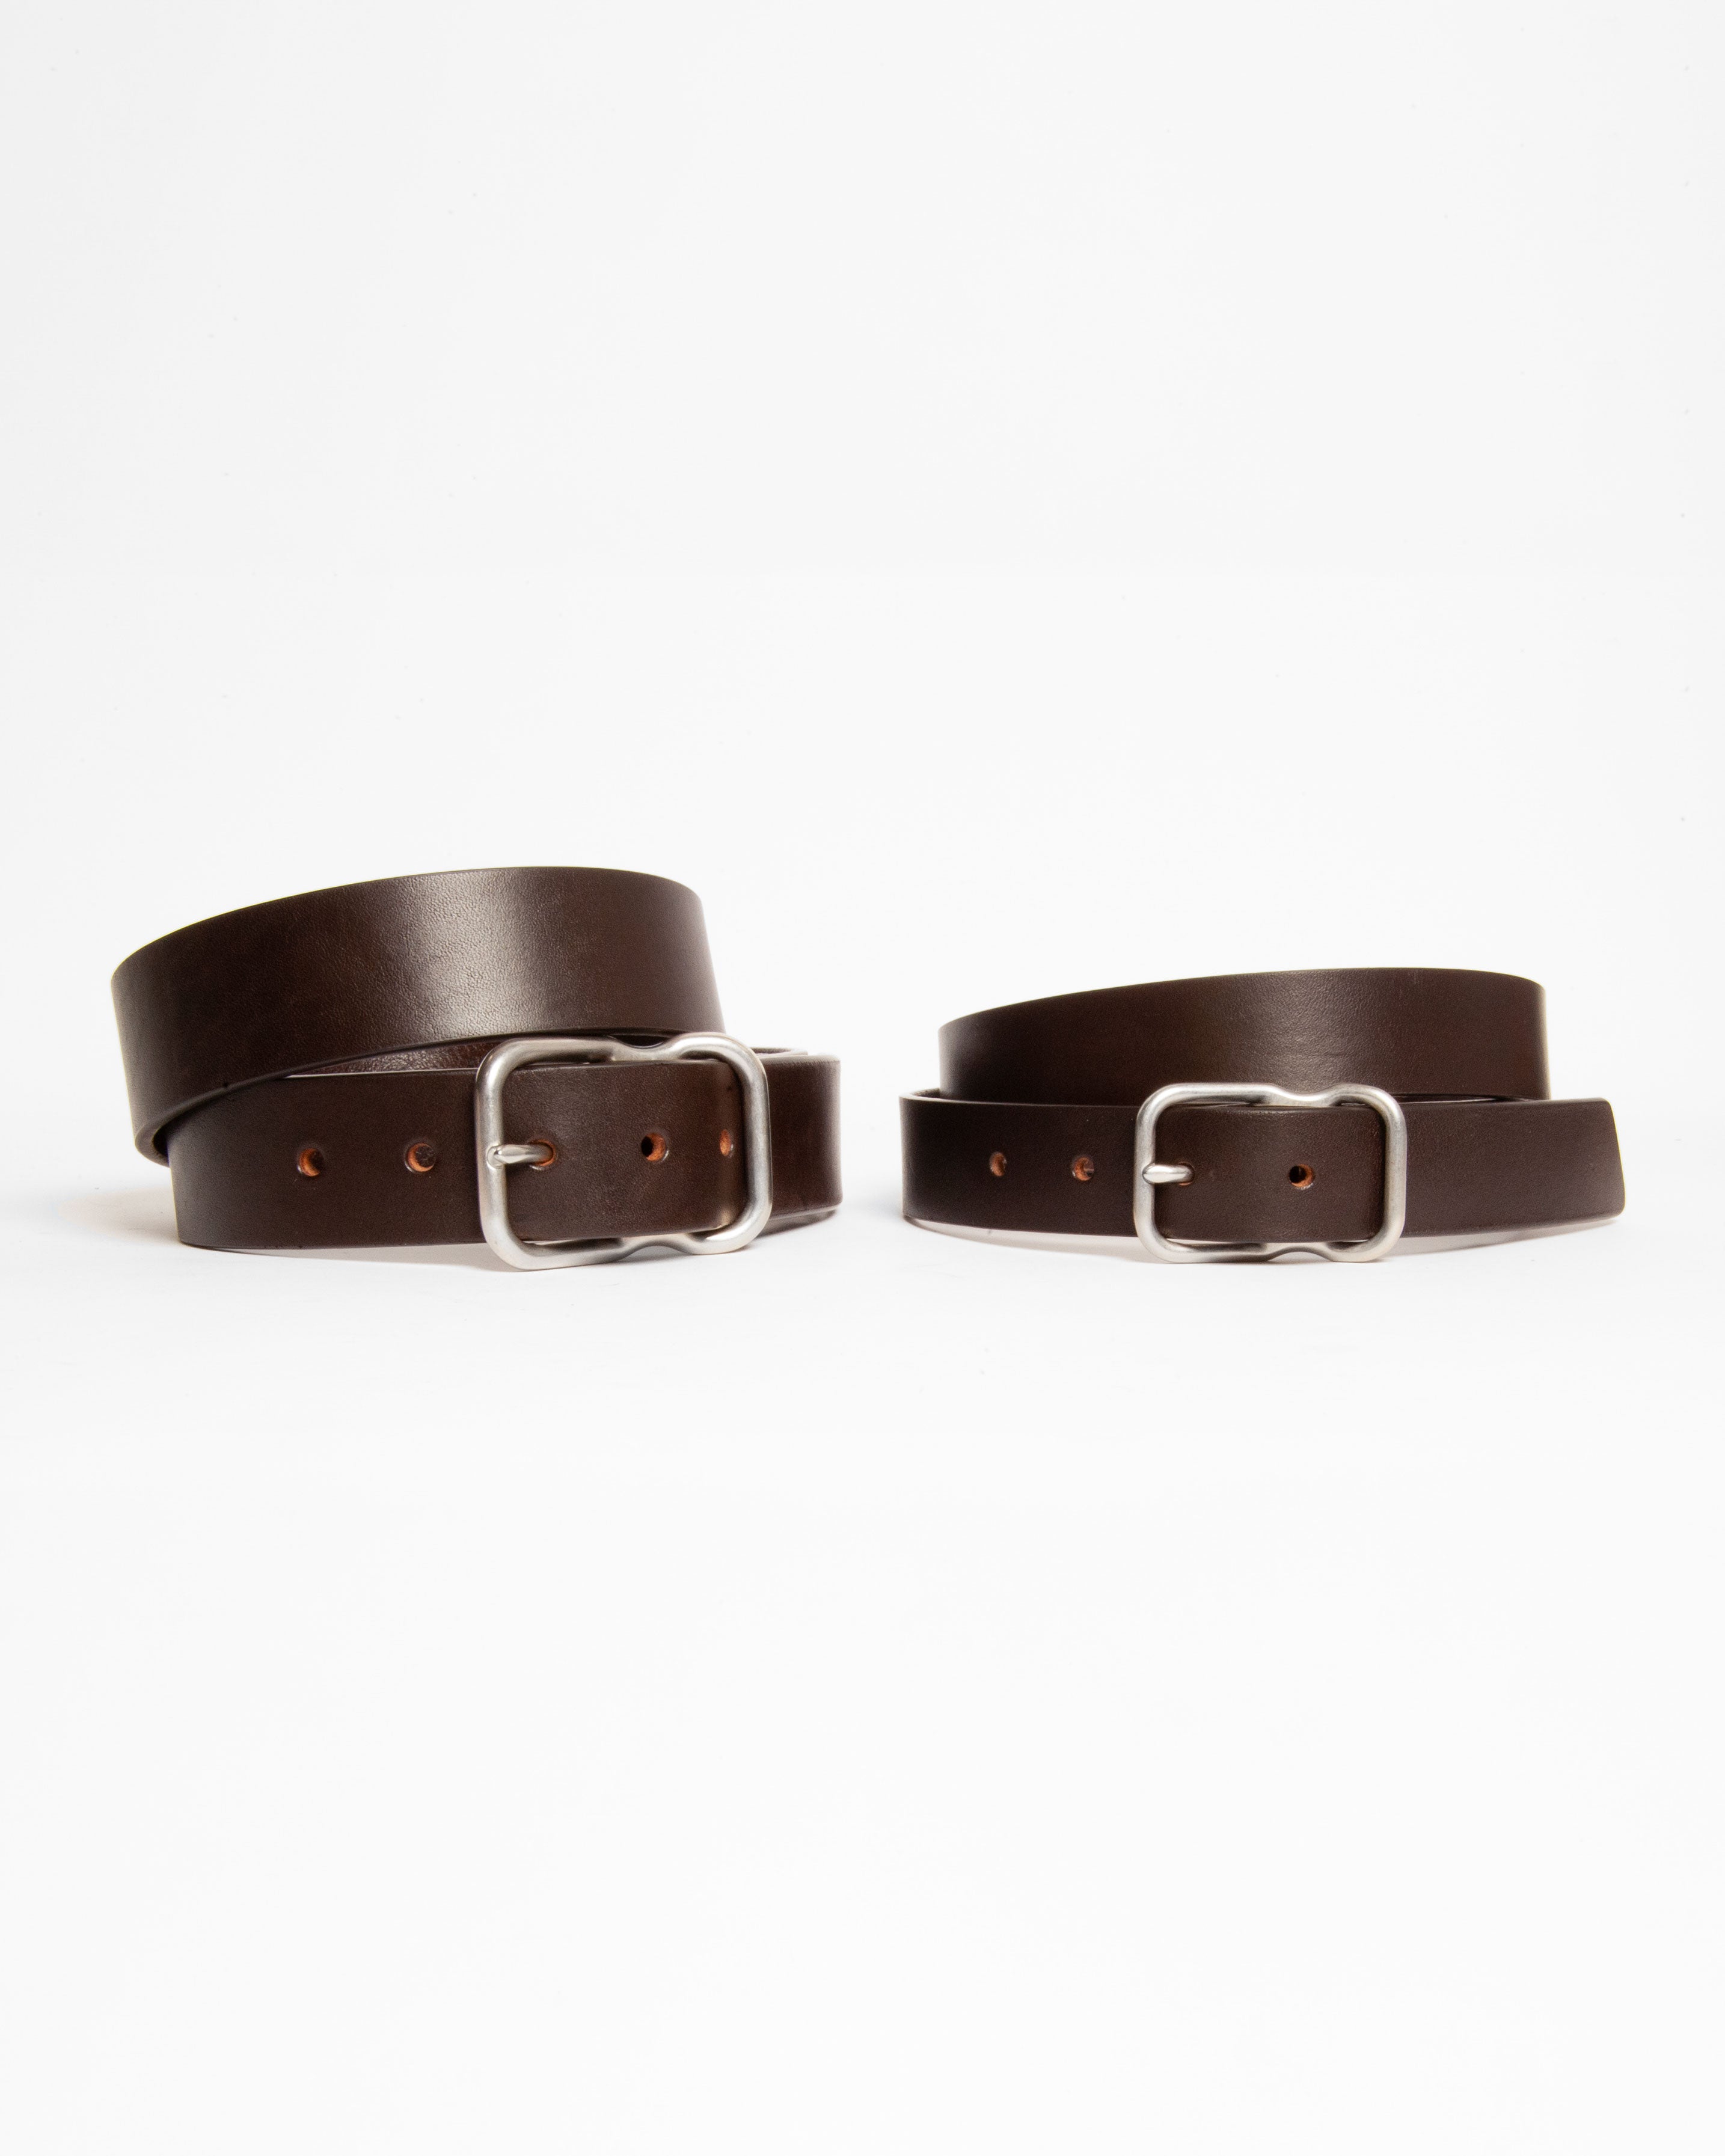 118 Signature Leather Belt - Narrow - Dark Brown - Nickel